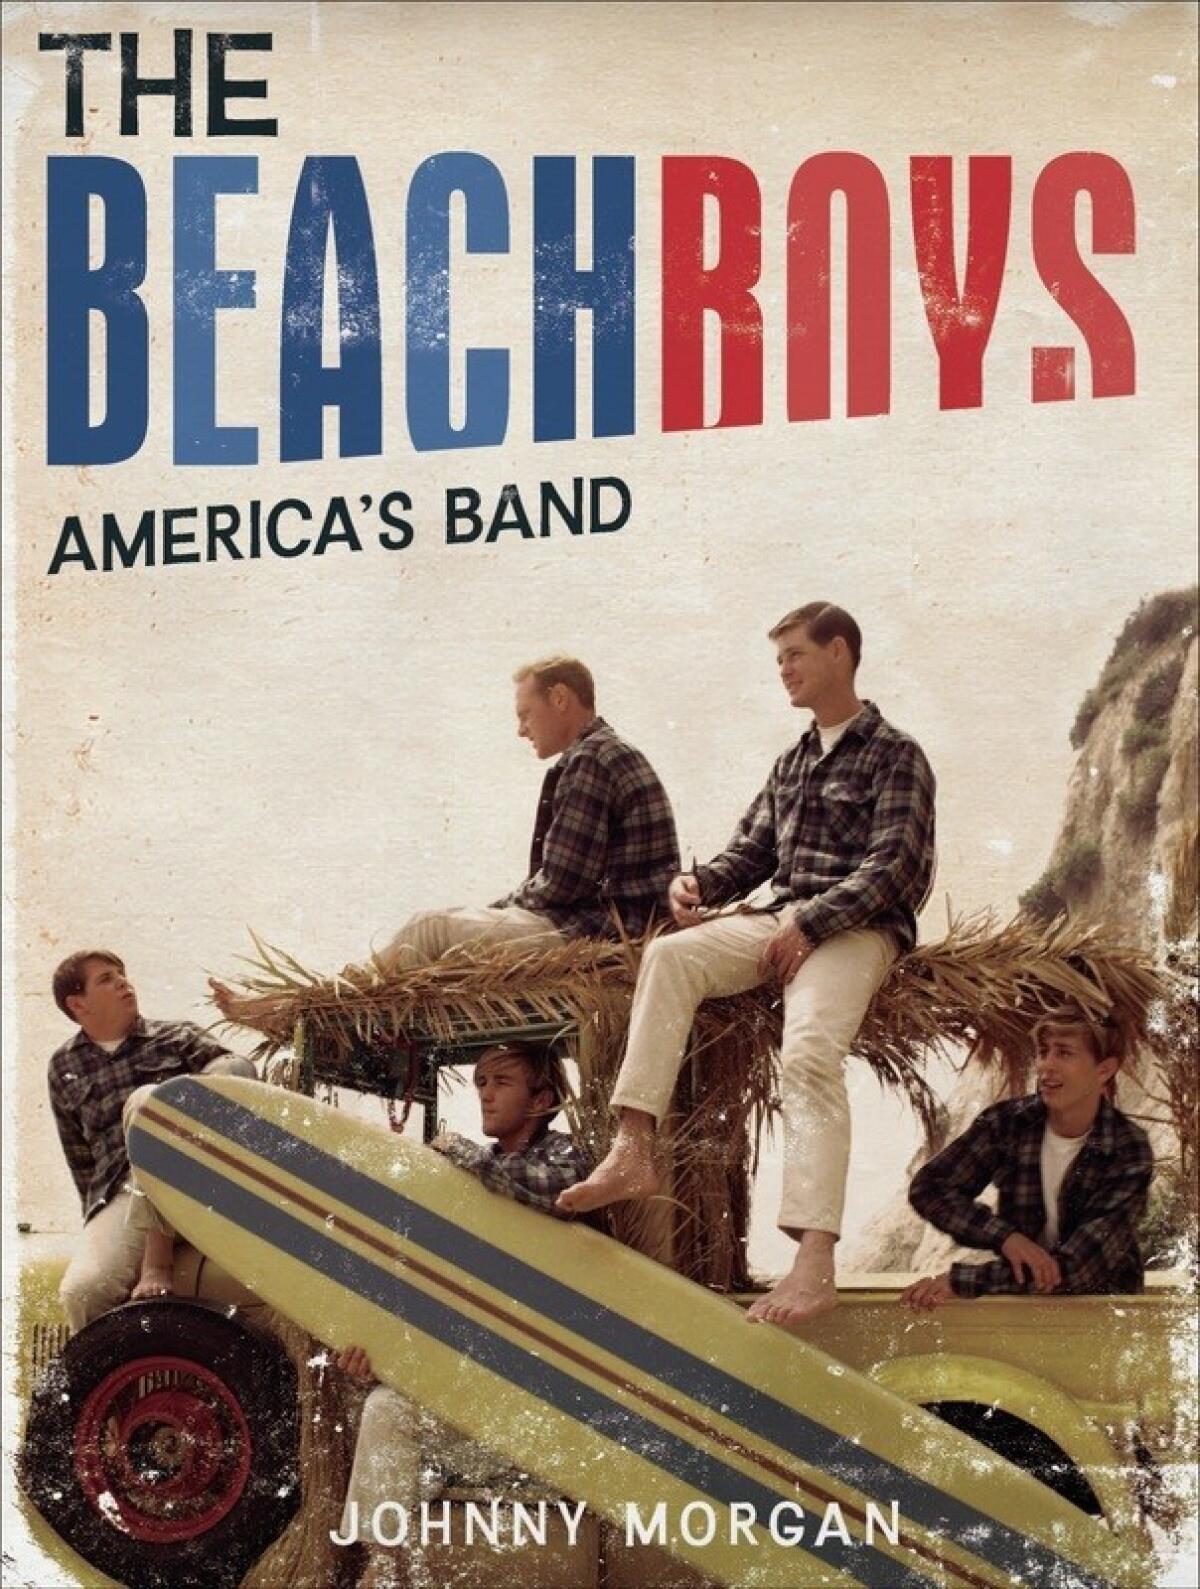 The Beach Boys: America's Band by Johnny Morgan